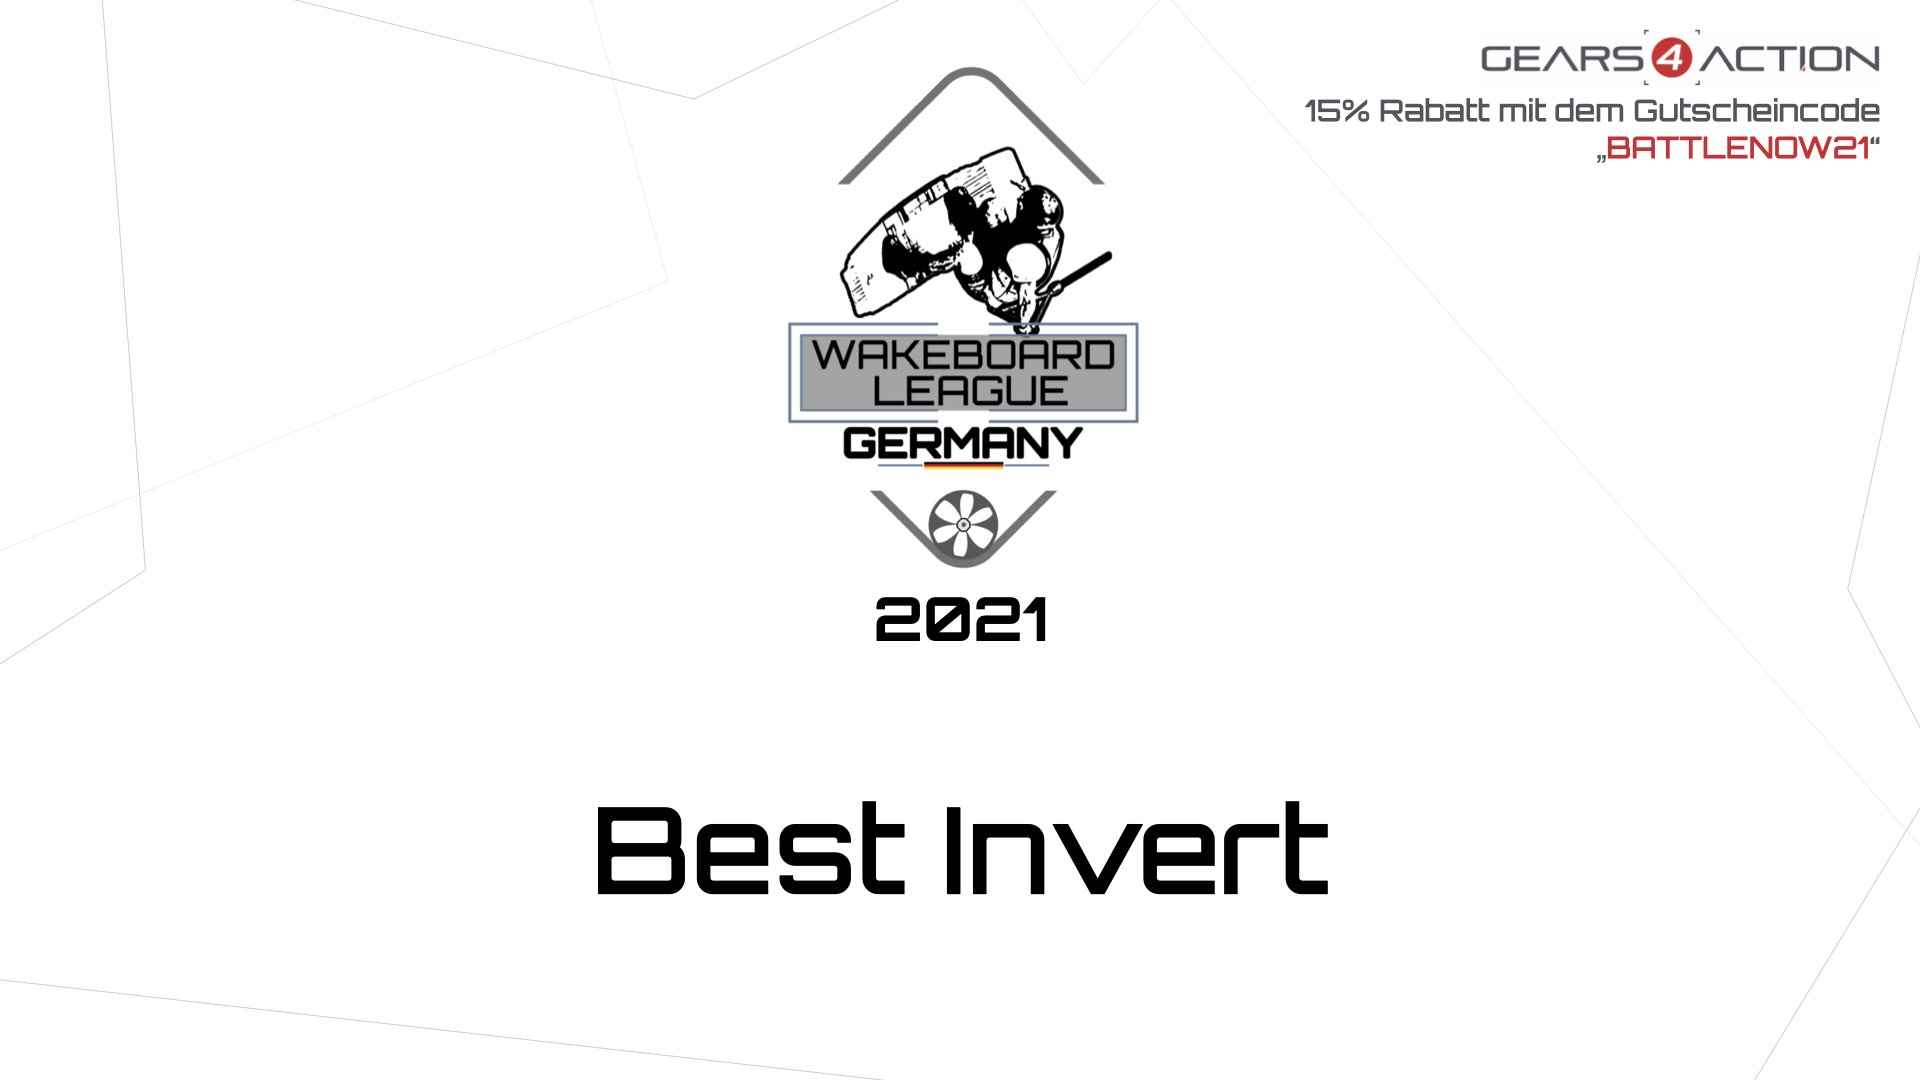 Wakeboard League Germany 2021 - #10 Best Invert